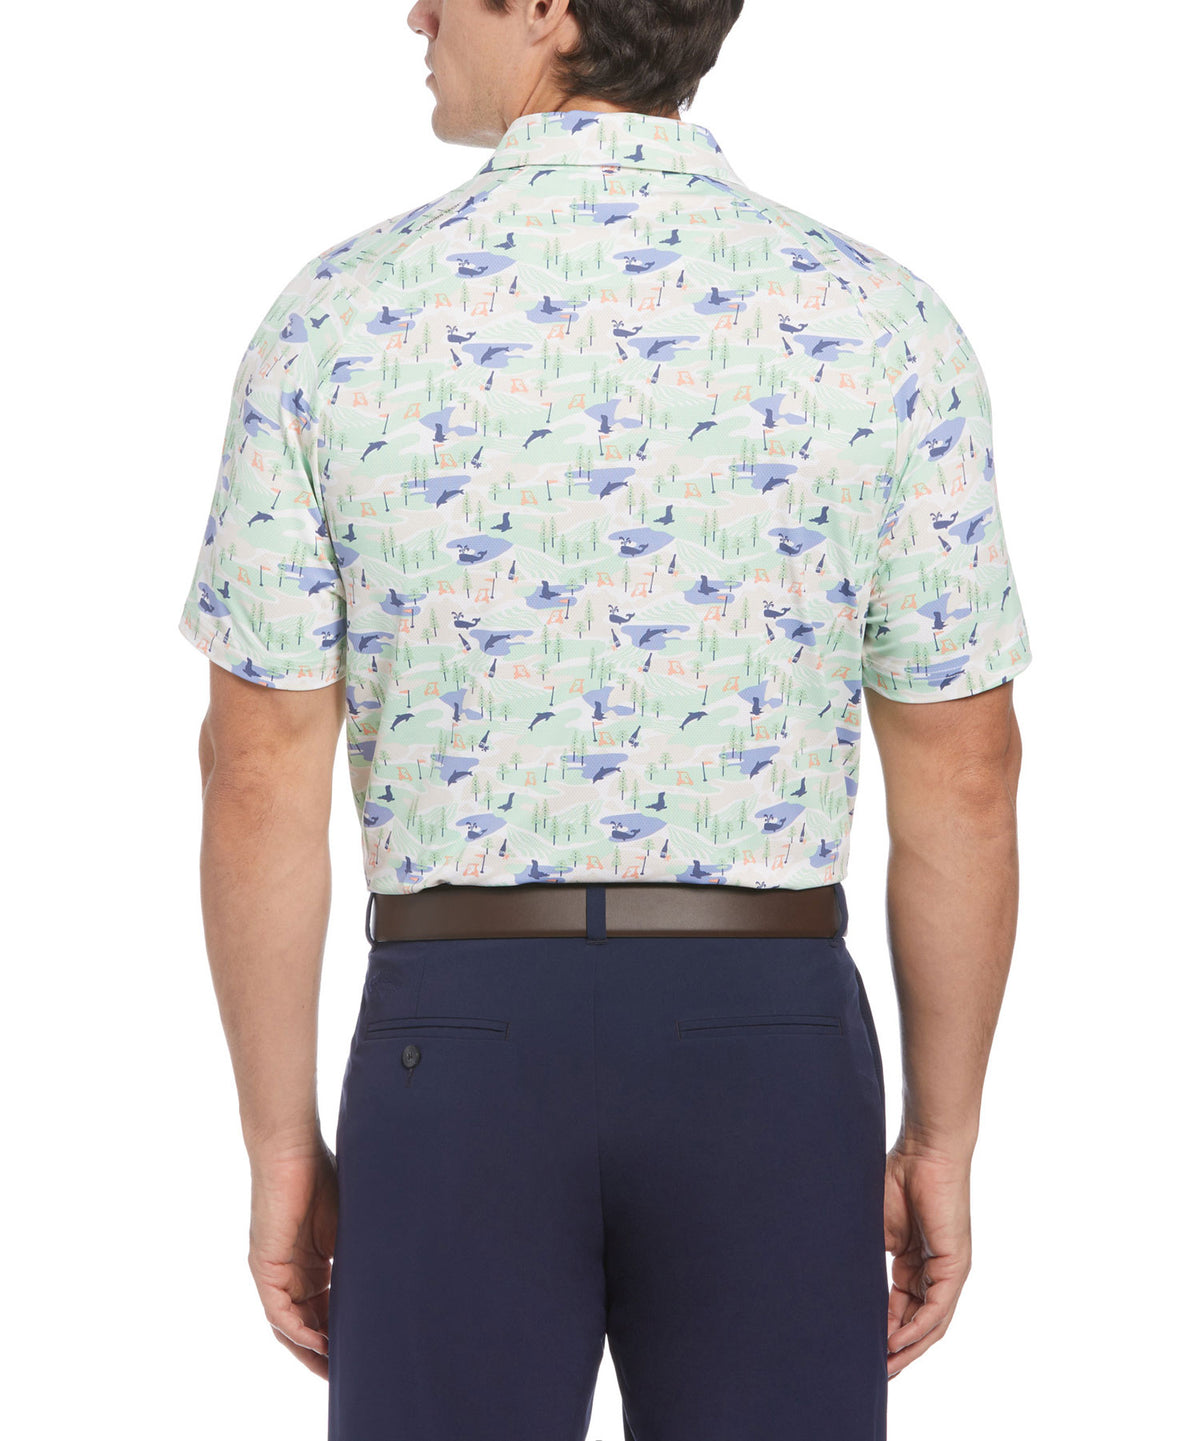 Callaway Short Sleeve Coastal Print Polo Knit Shirt, Big & Tall